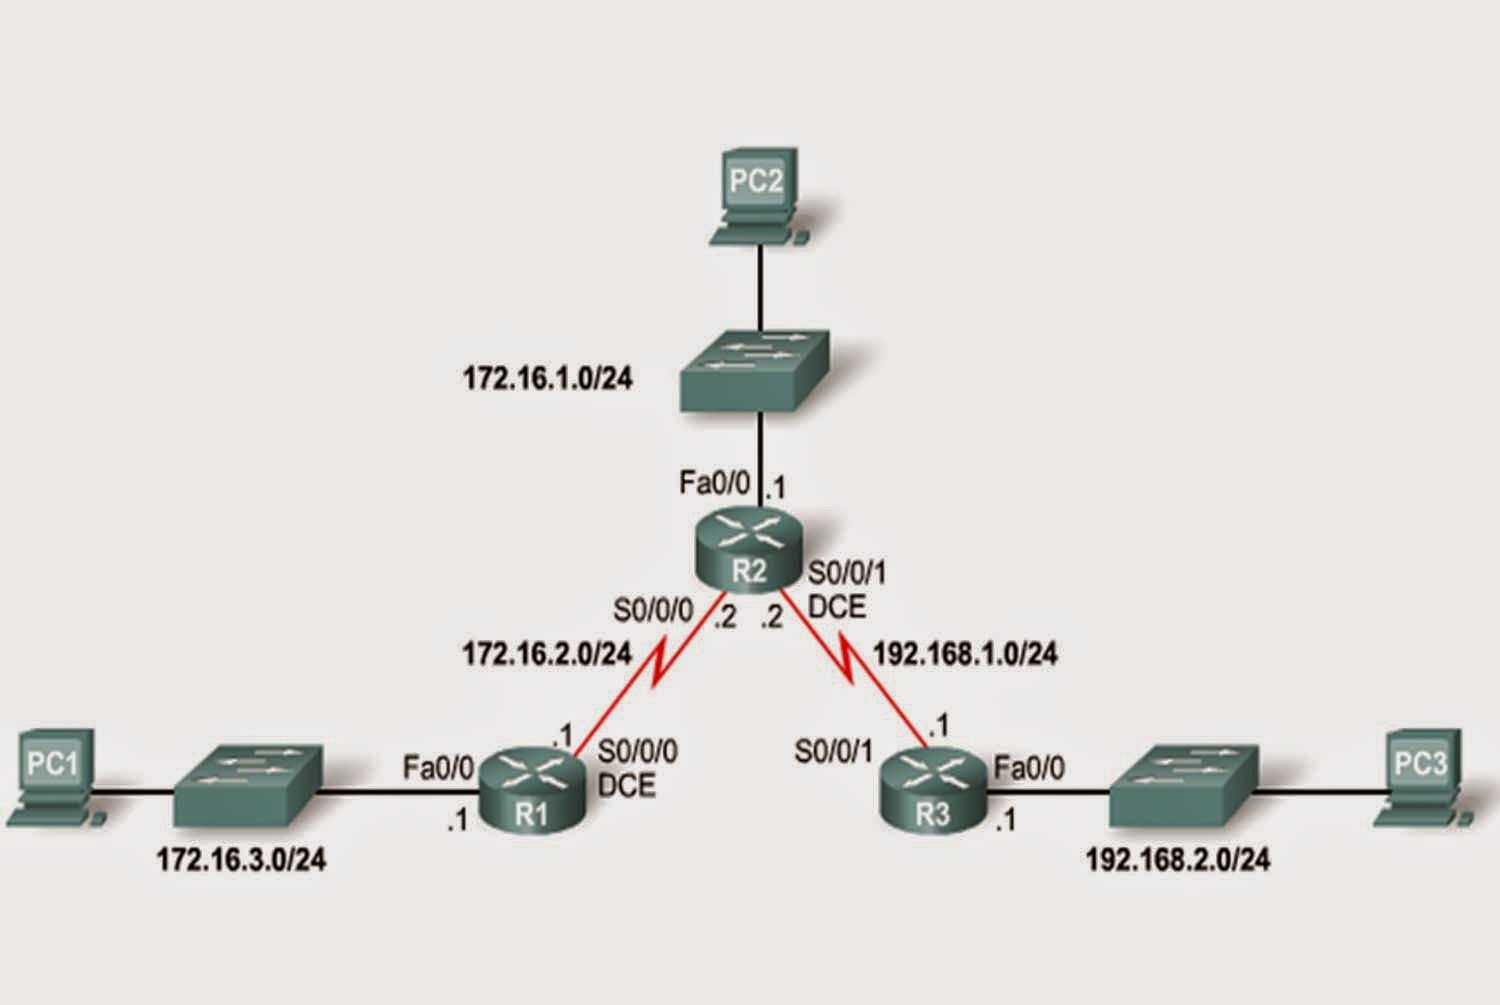 Route interface. Таблица маршрутизации Router. Статическая маршрутизация Cisco. Статическая и динамическая маршрутизация. Динамическая маршрутизация схема Циско.